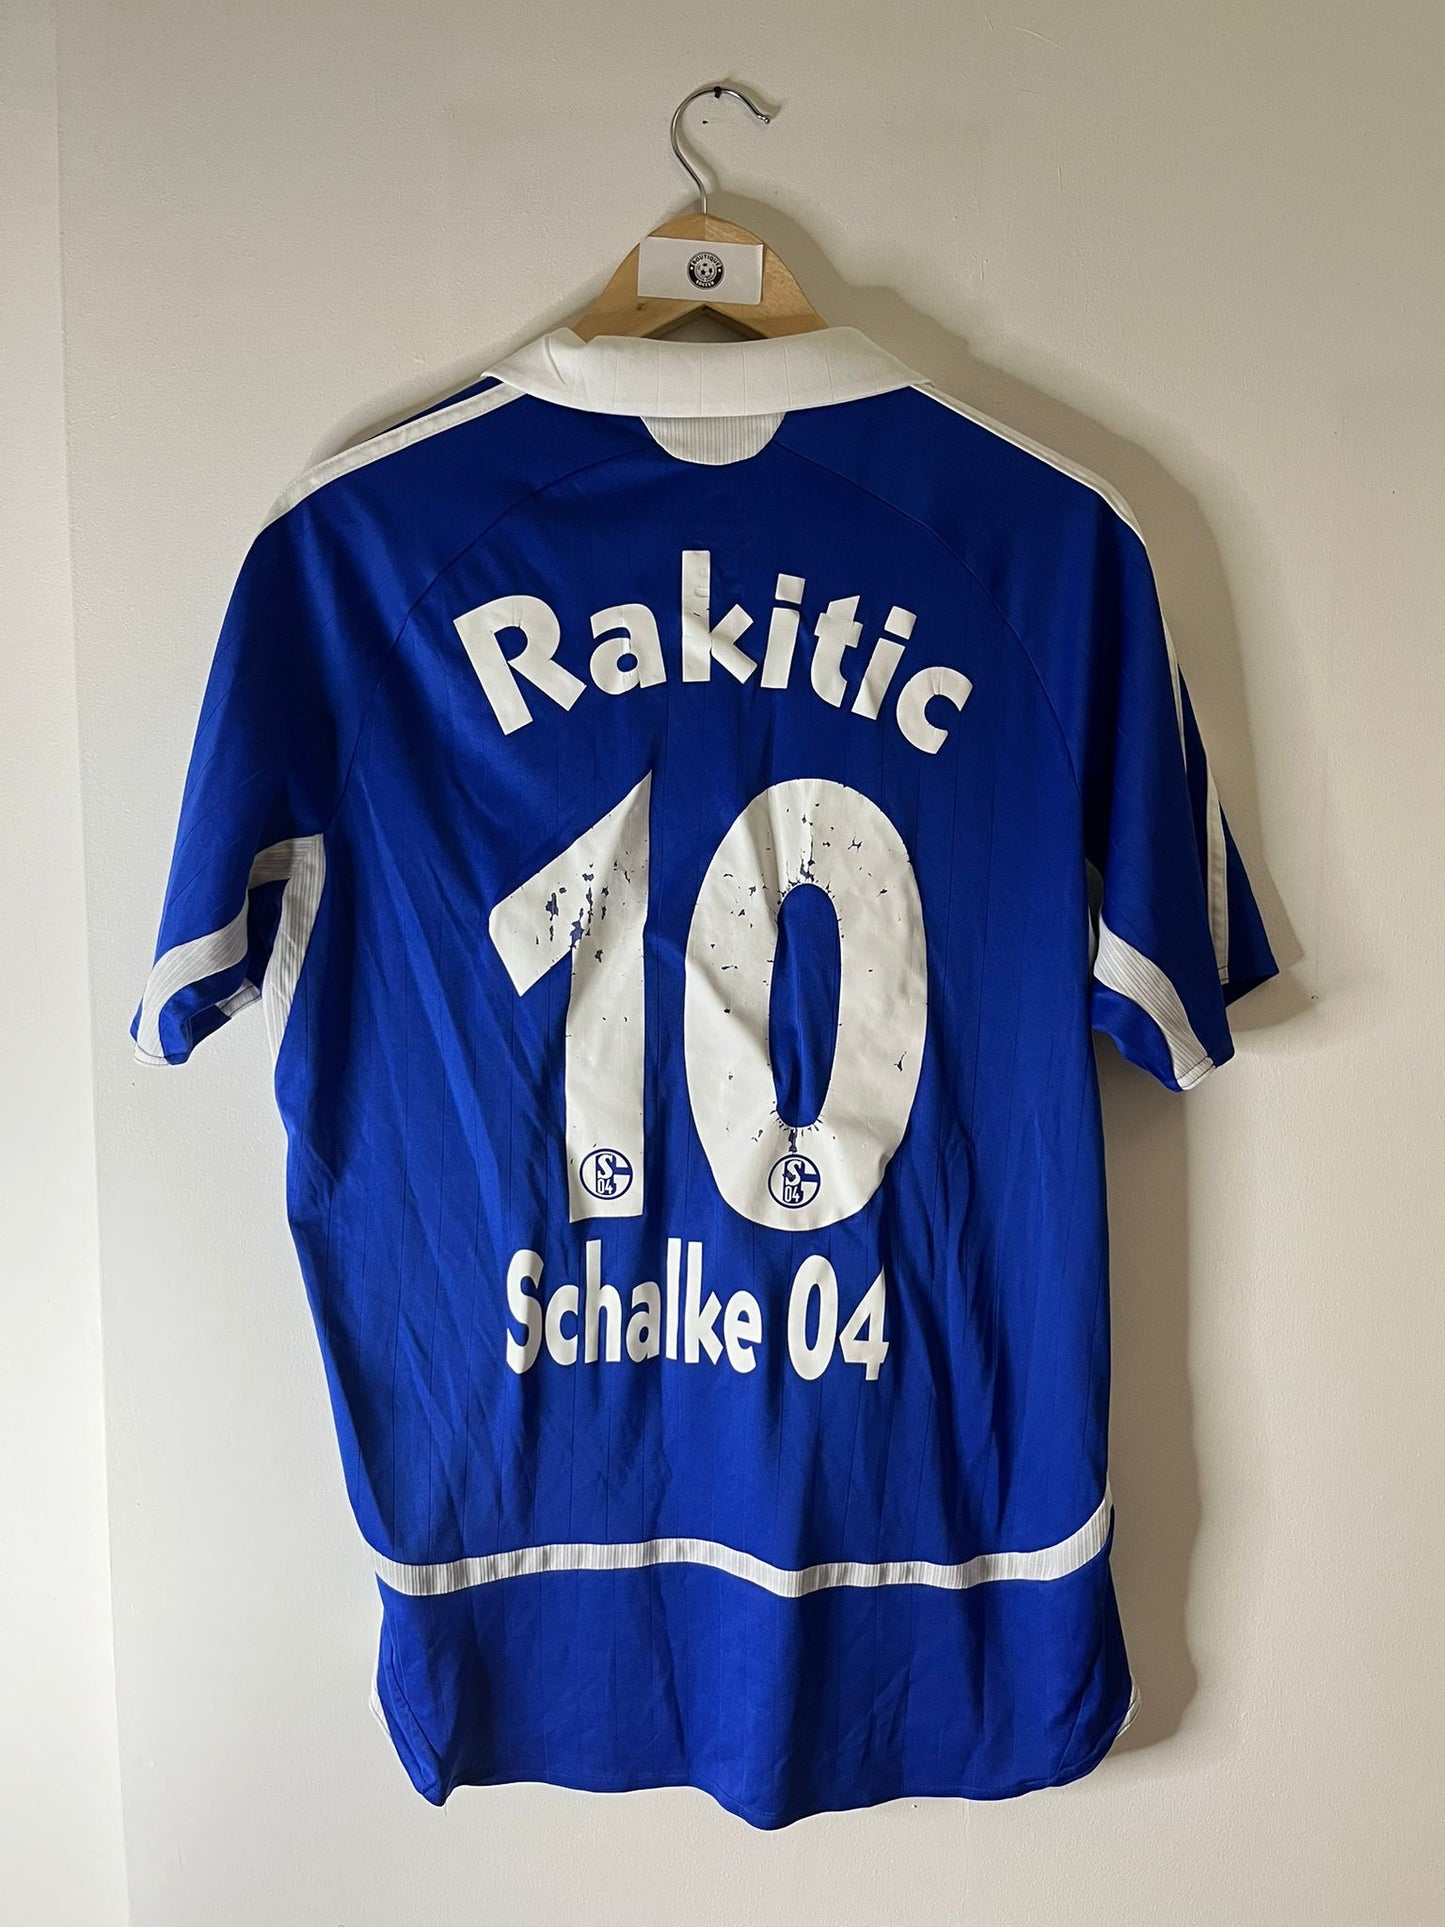 Rakitic schalke 04 shirt